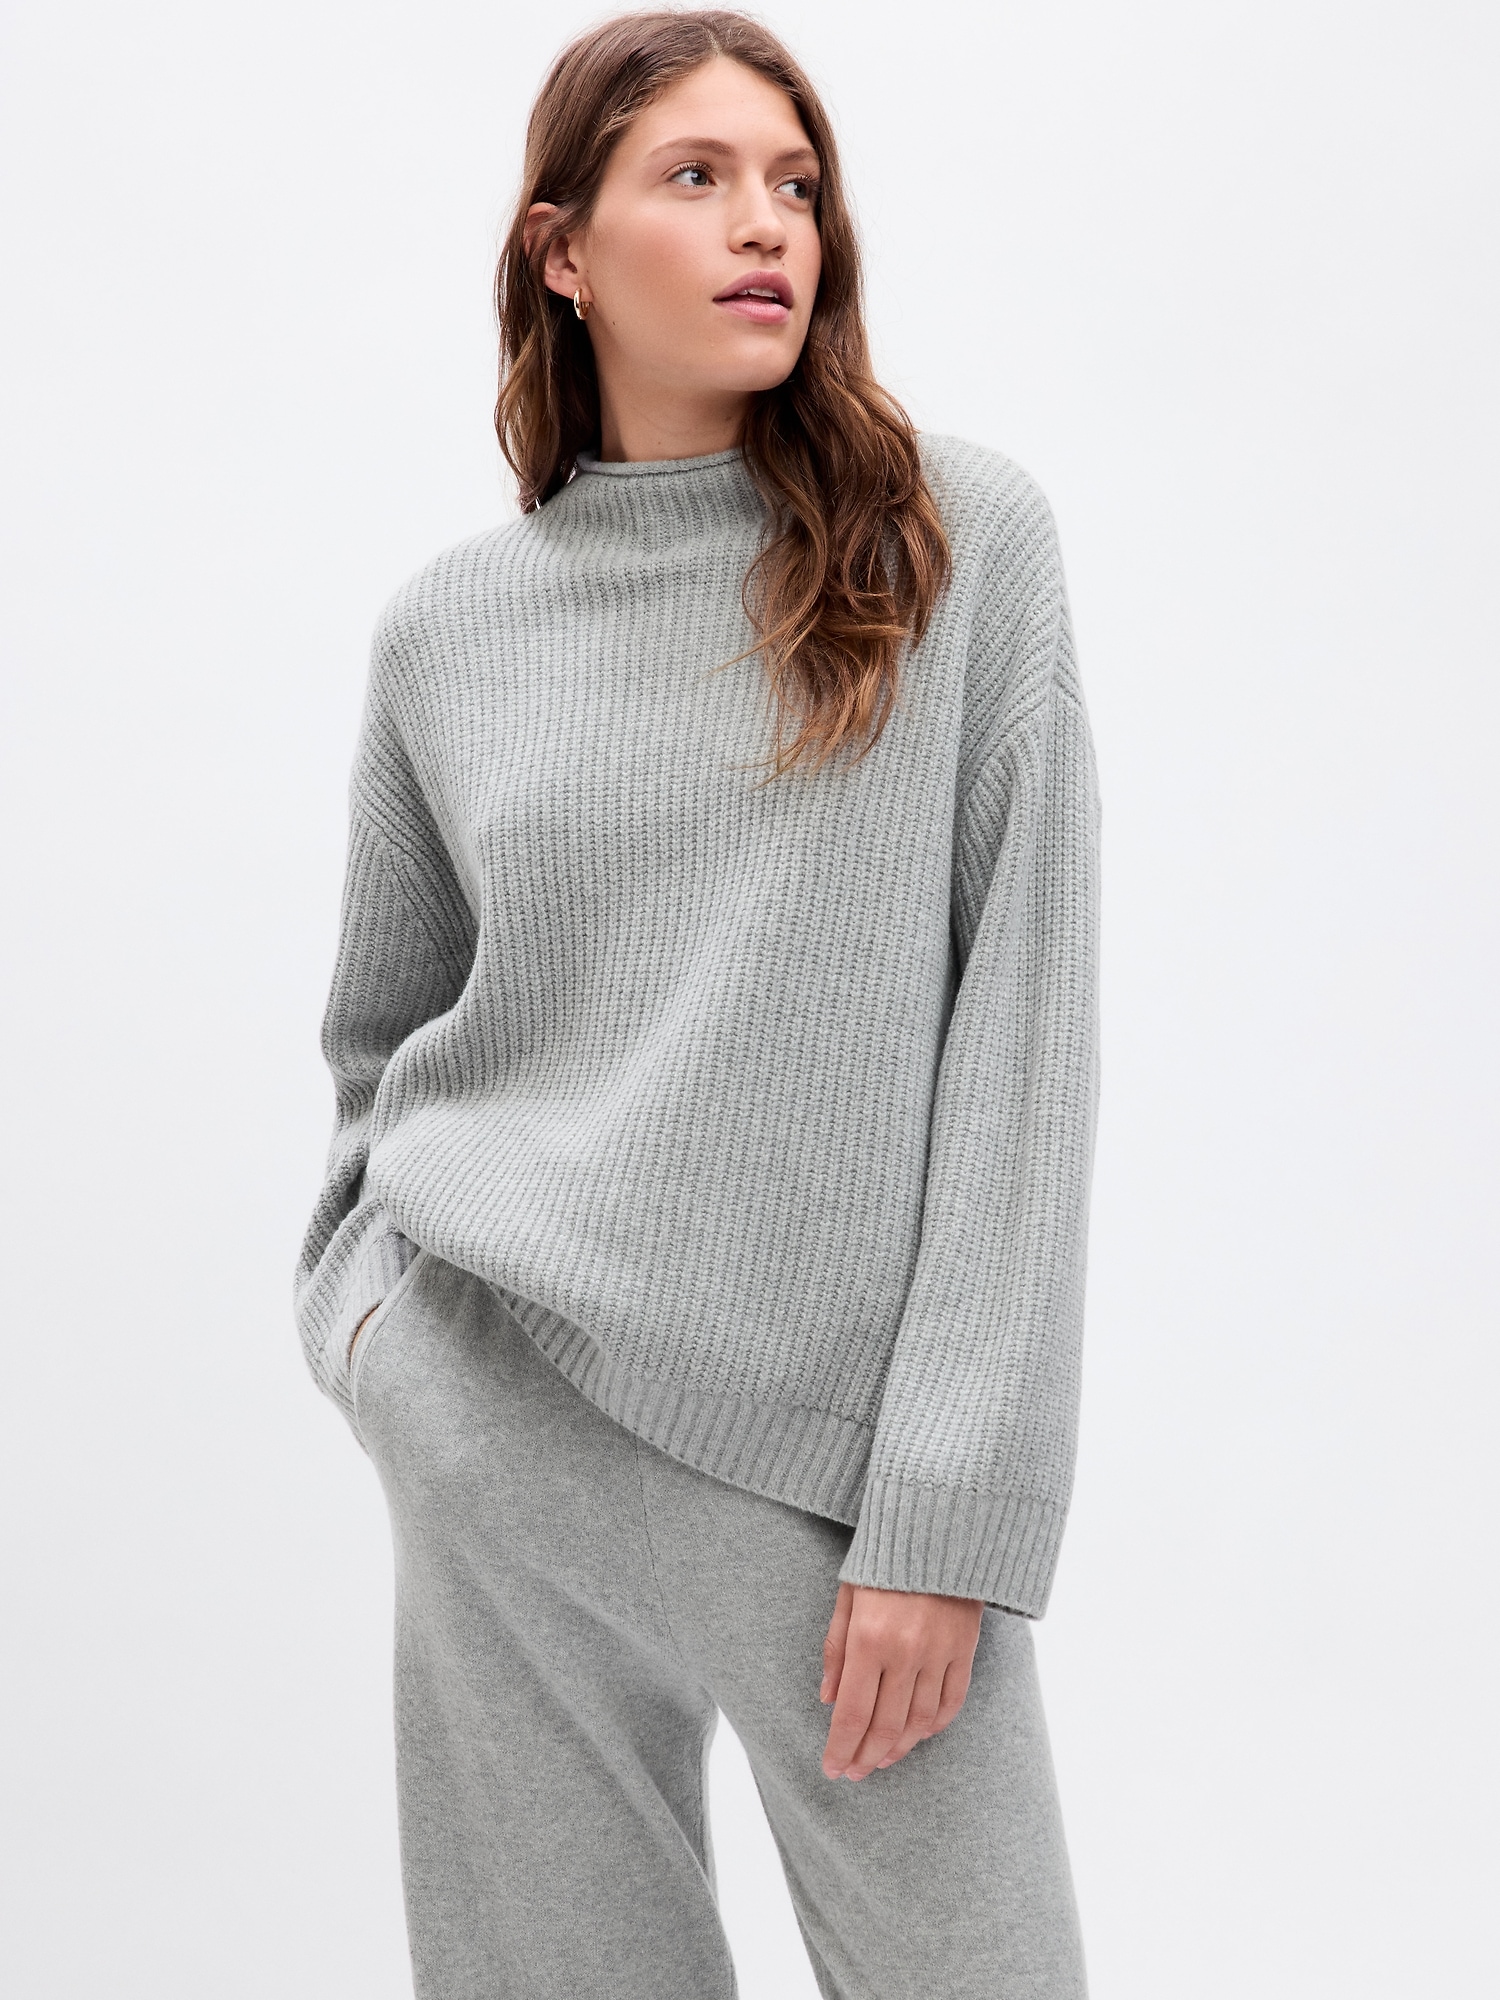 CashSoft Funnel Neck Oversized Sweater | Gap